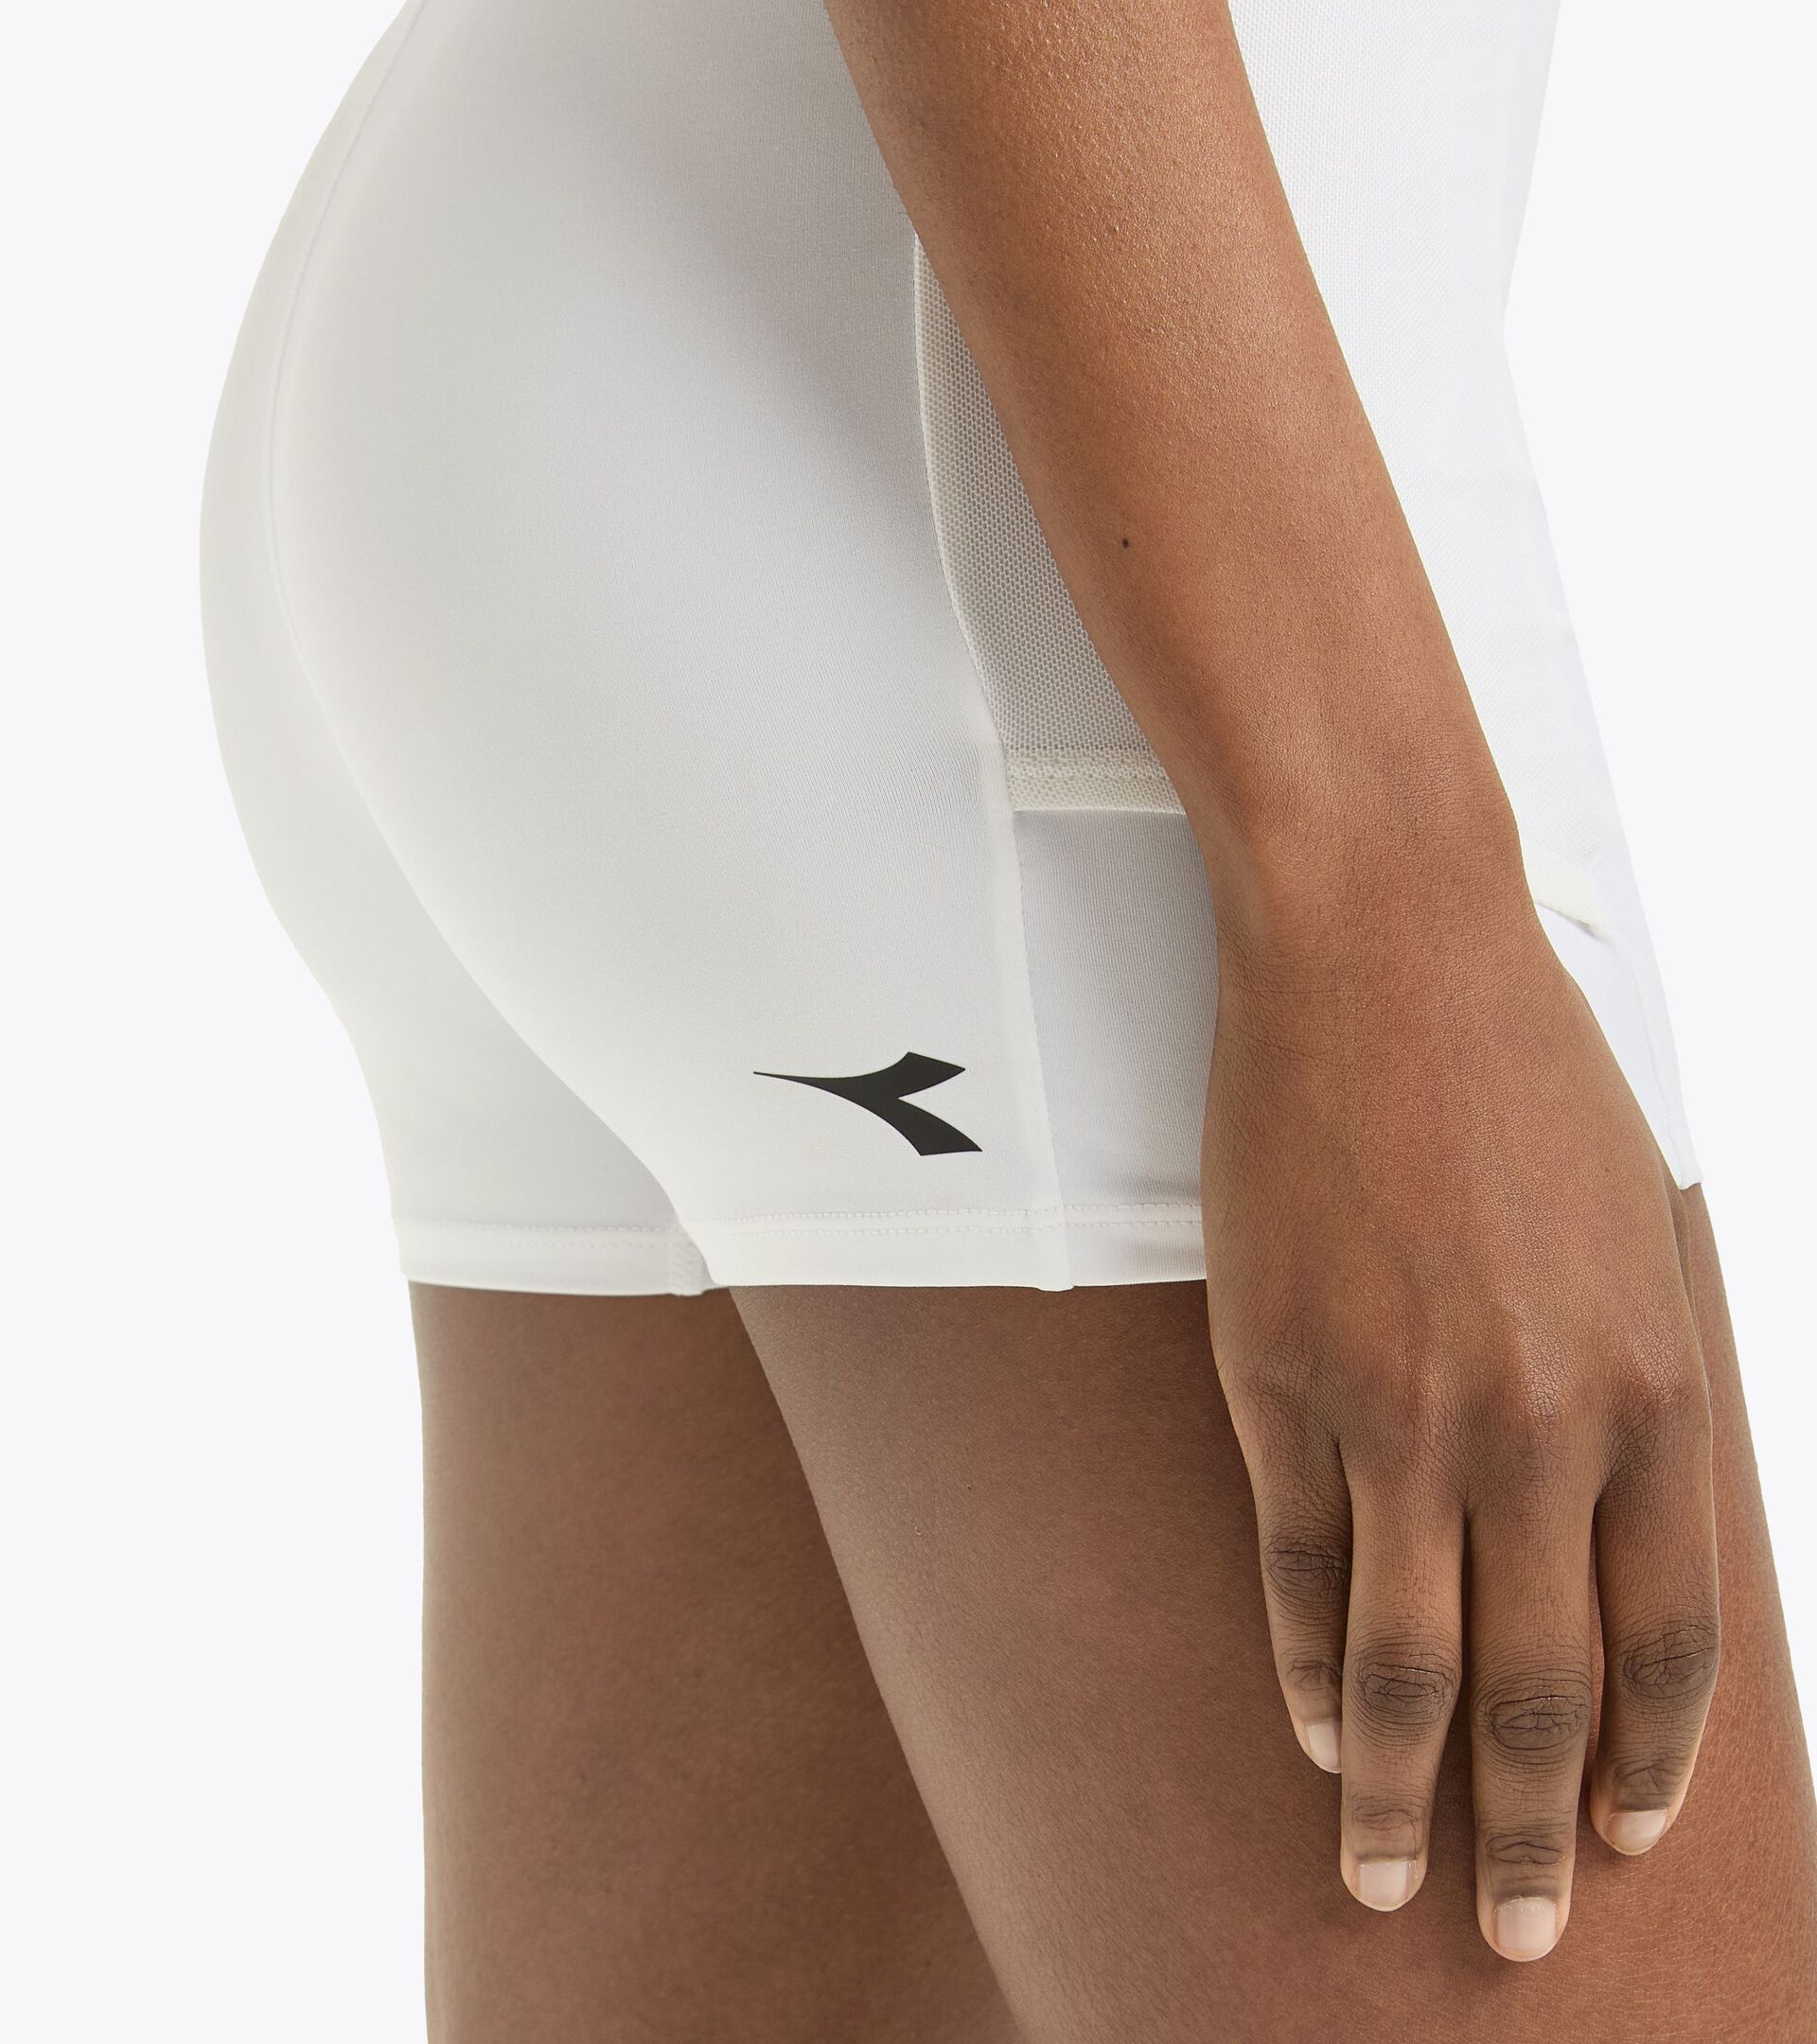 Tennis shorts - Women’s
 L. SHORT TIGHTS POCKETS OPTICAL WHITE - Diadora